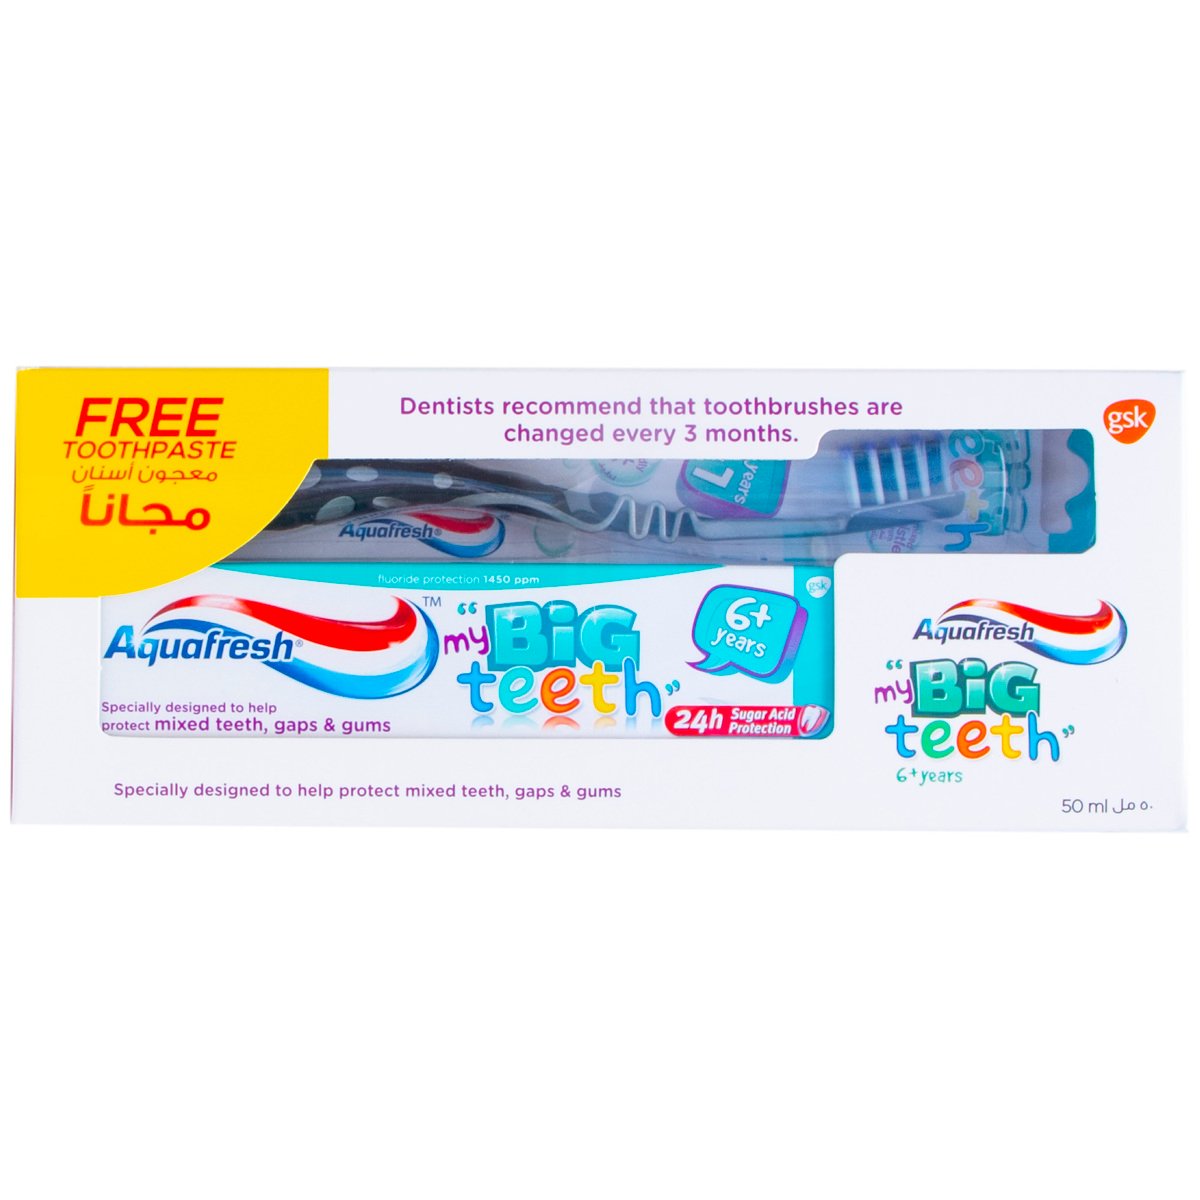 Aquafresh Big Teeth Toothbrush + Toothpaste 50 ml 6+ Years